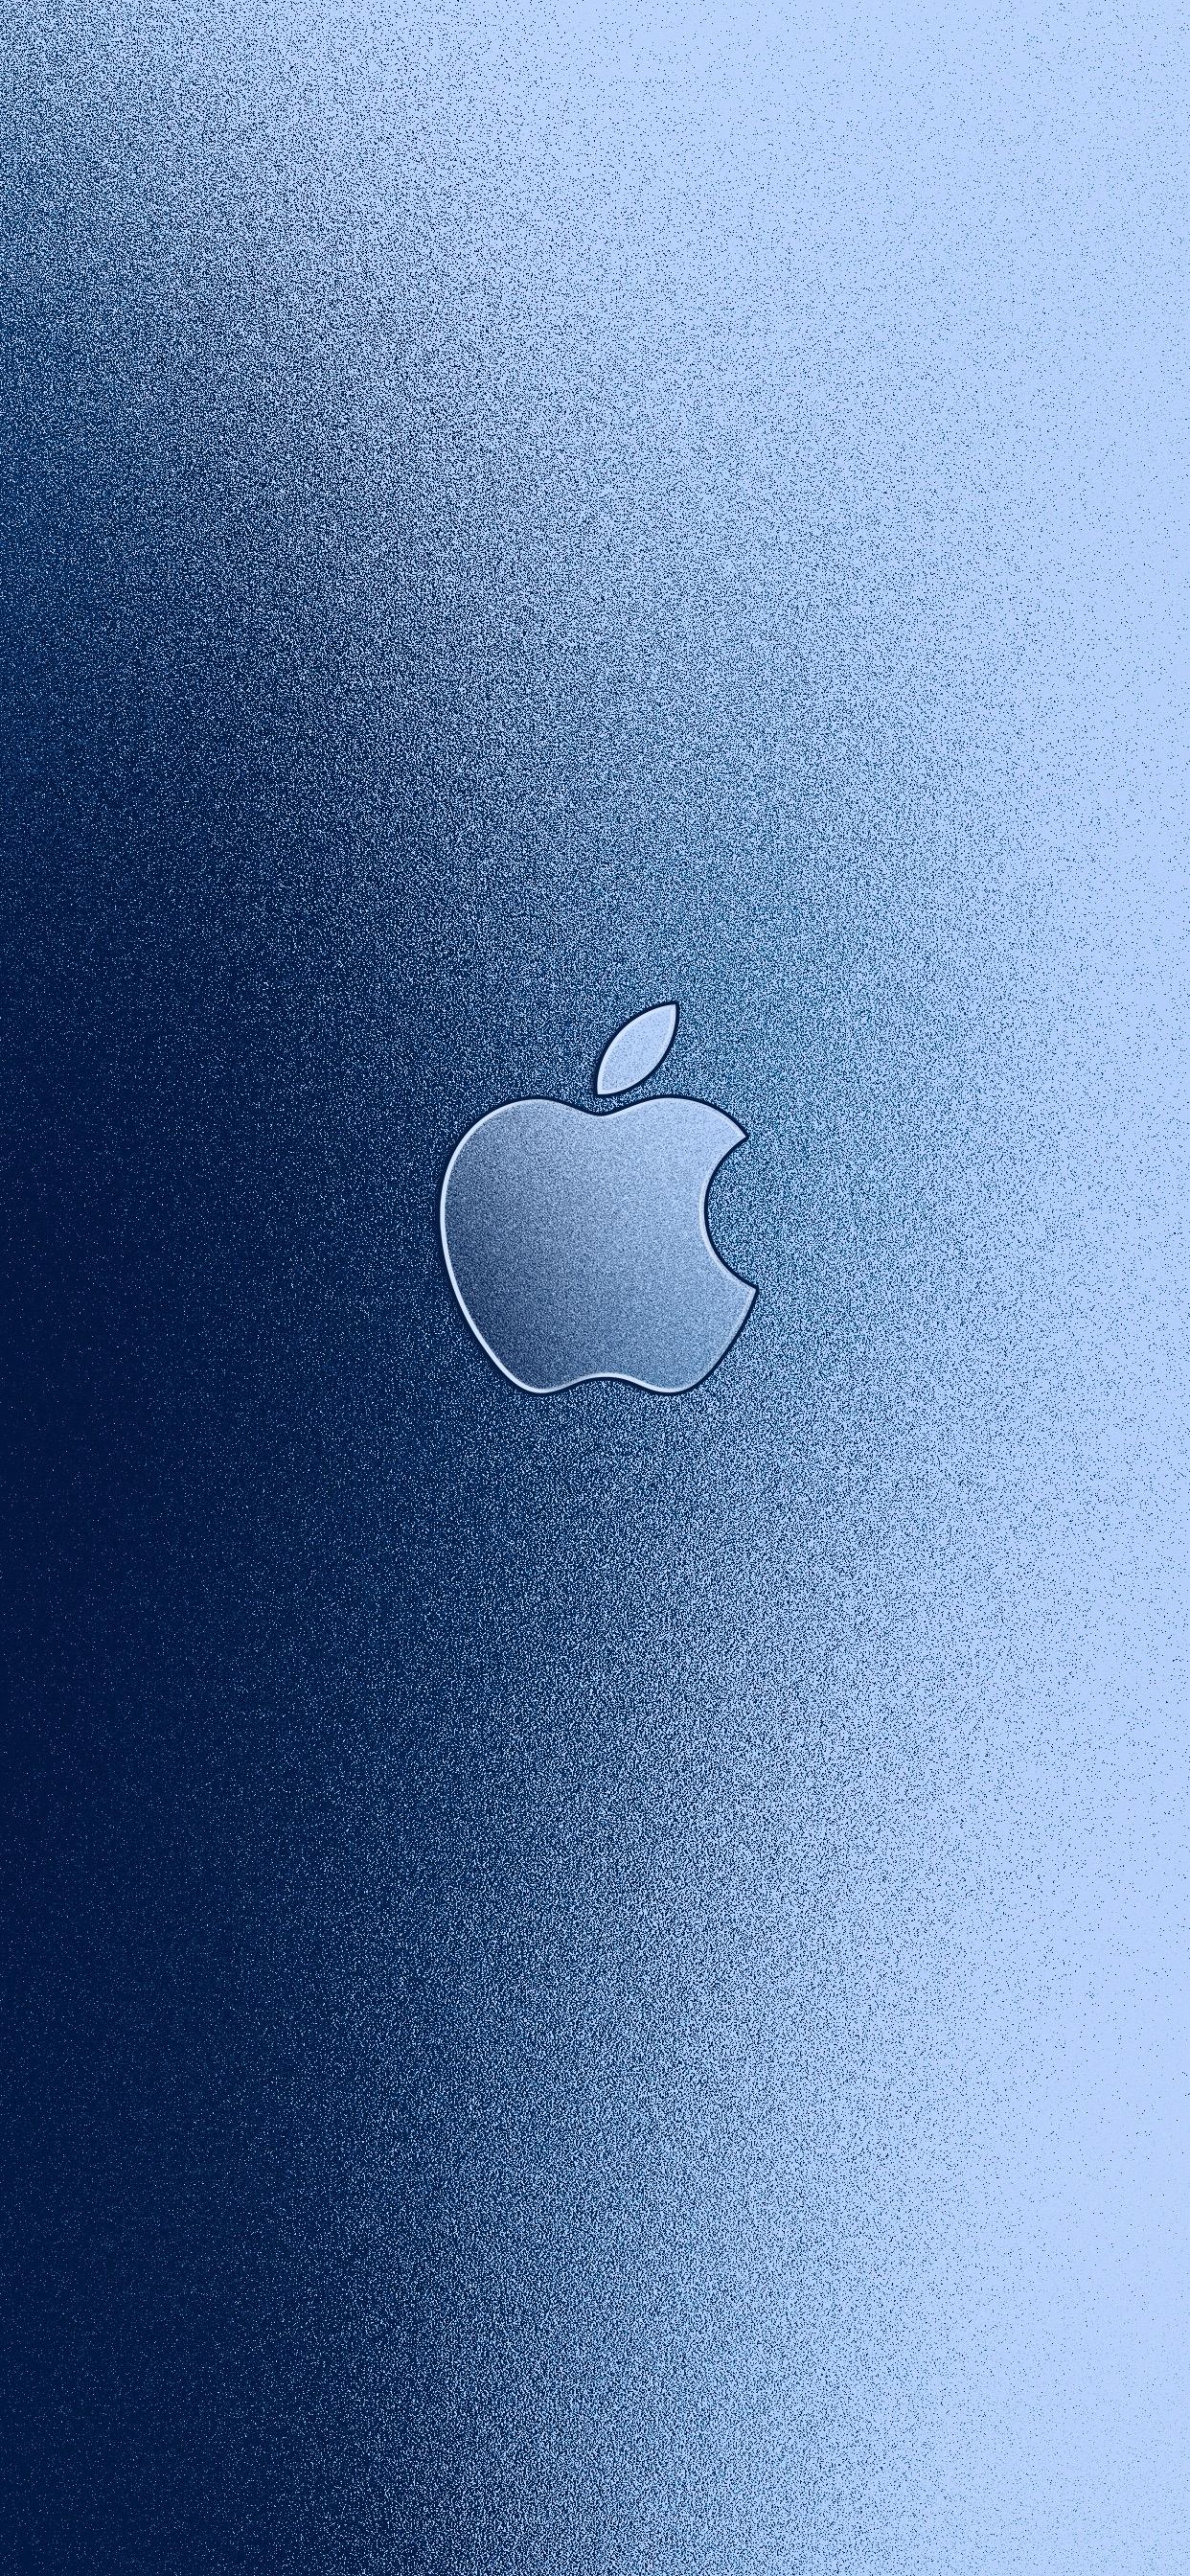 Free download Aluminum Apple logo wallpaper for iPhone